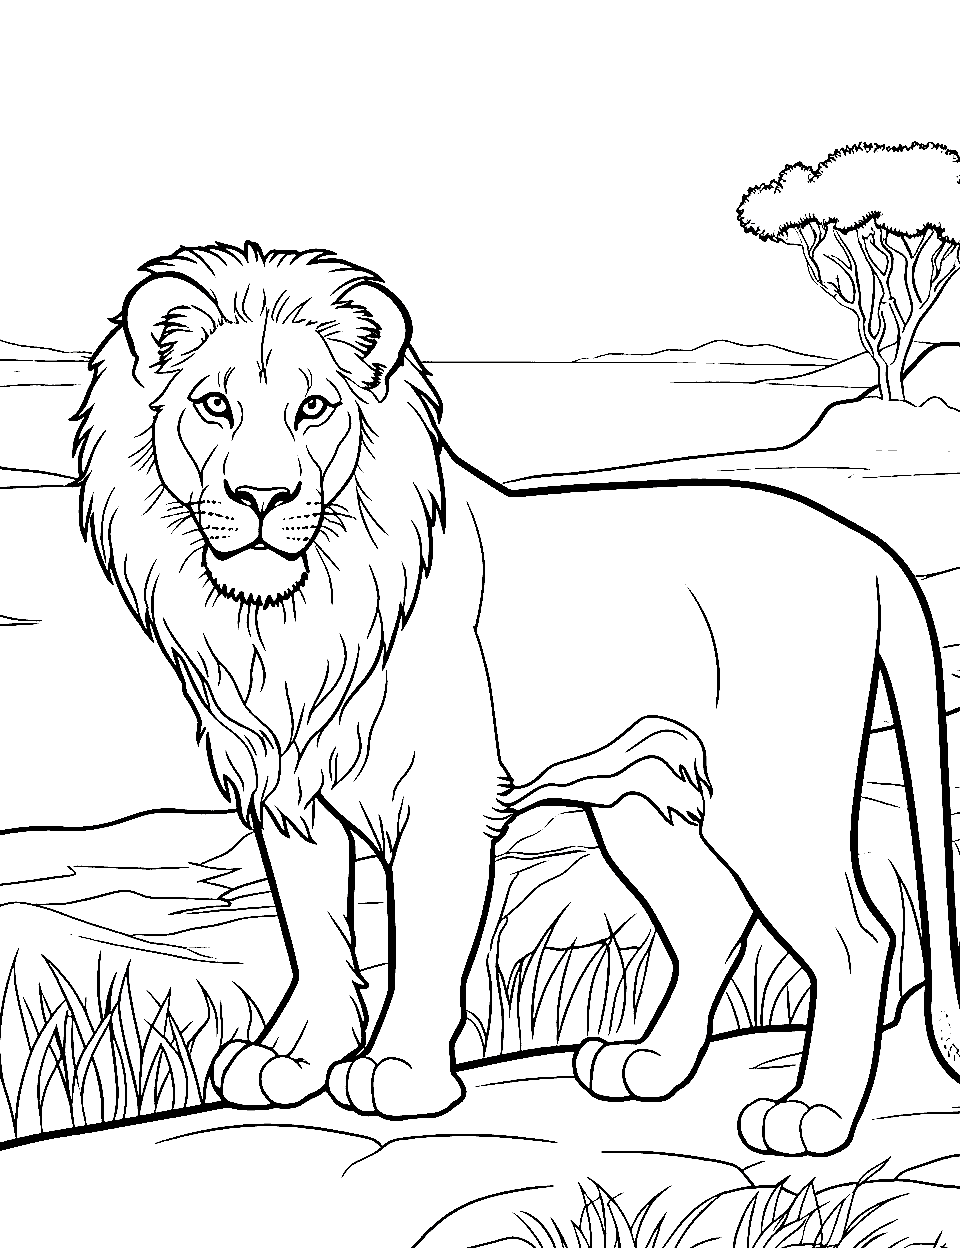 Savannah King Coloring Page - A lion in the vast savannah.